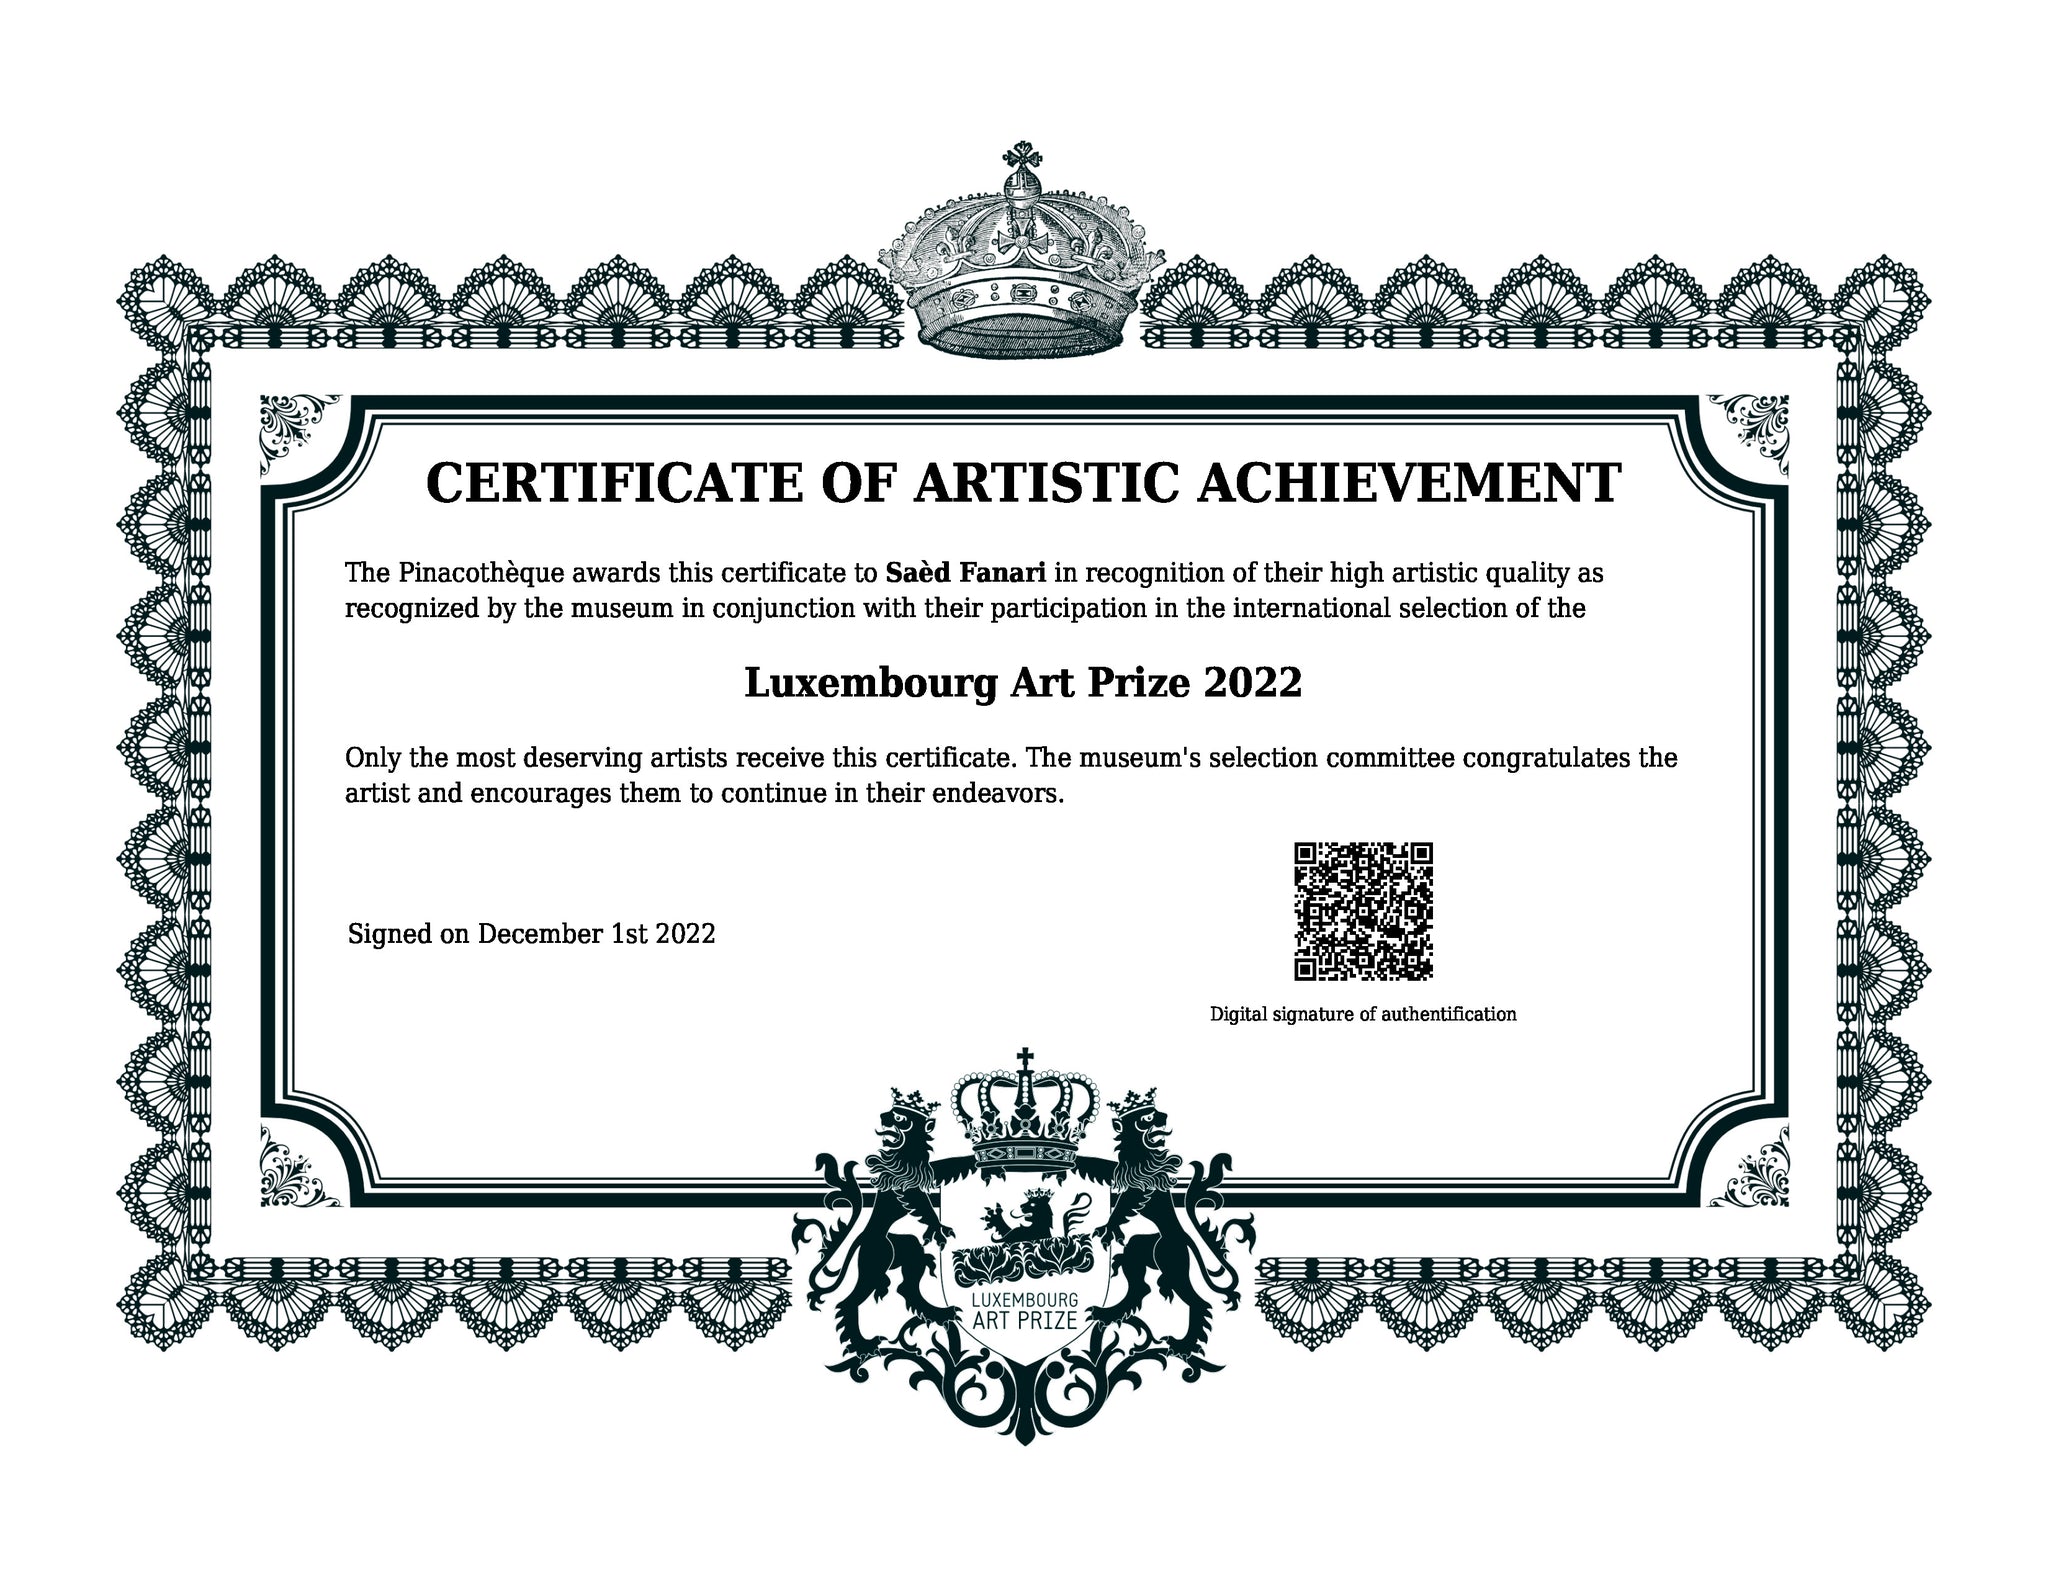 Certificate of artistic achievement - Luxembourg Art Prize 2022